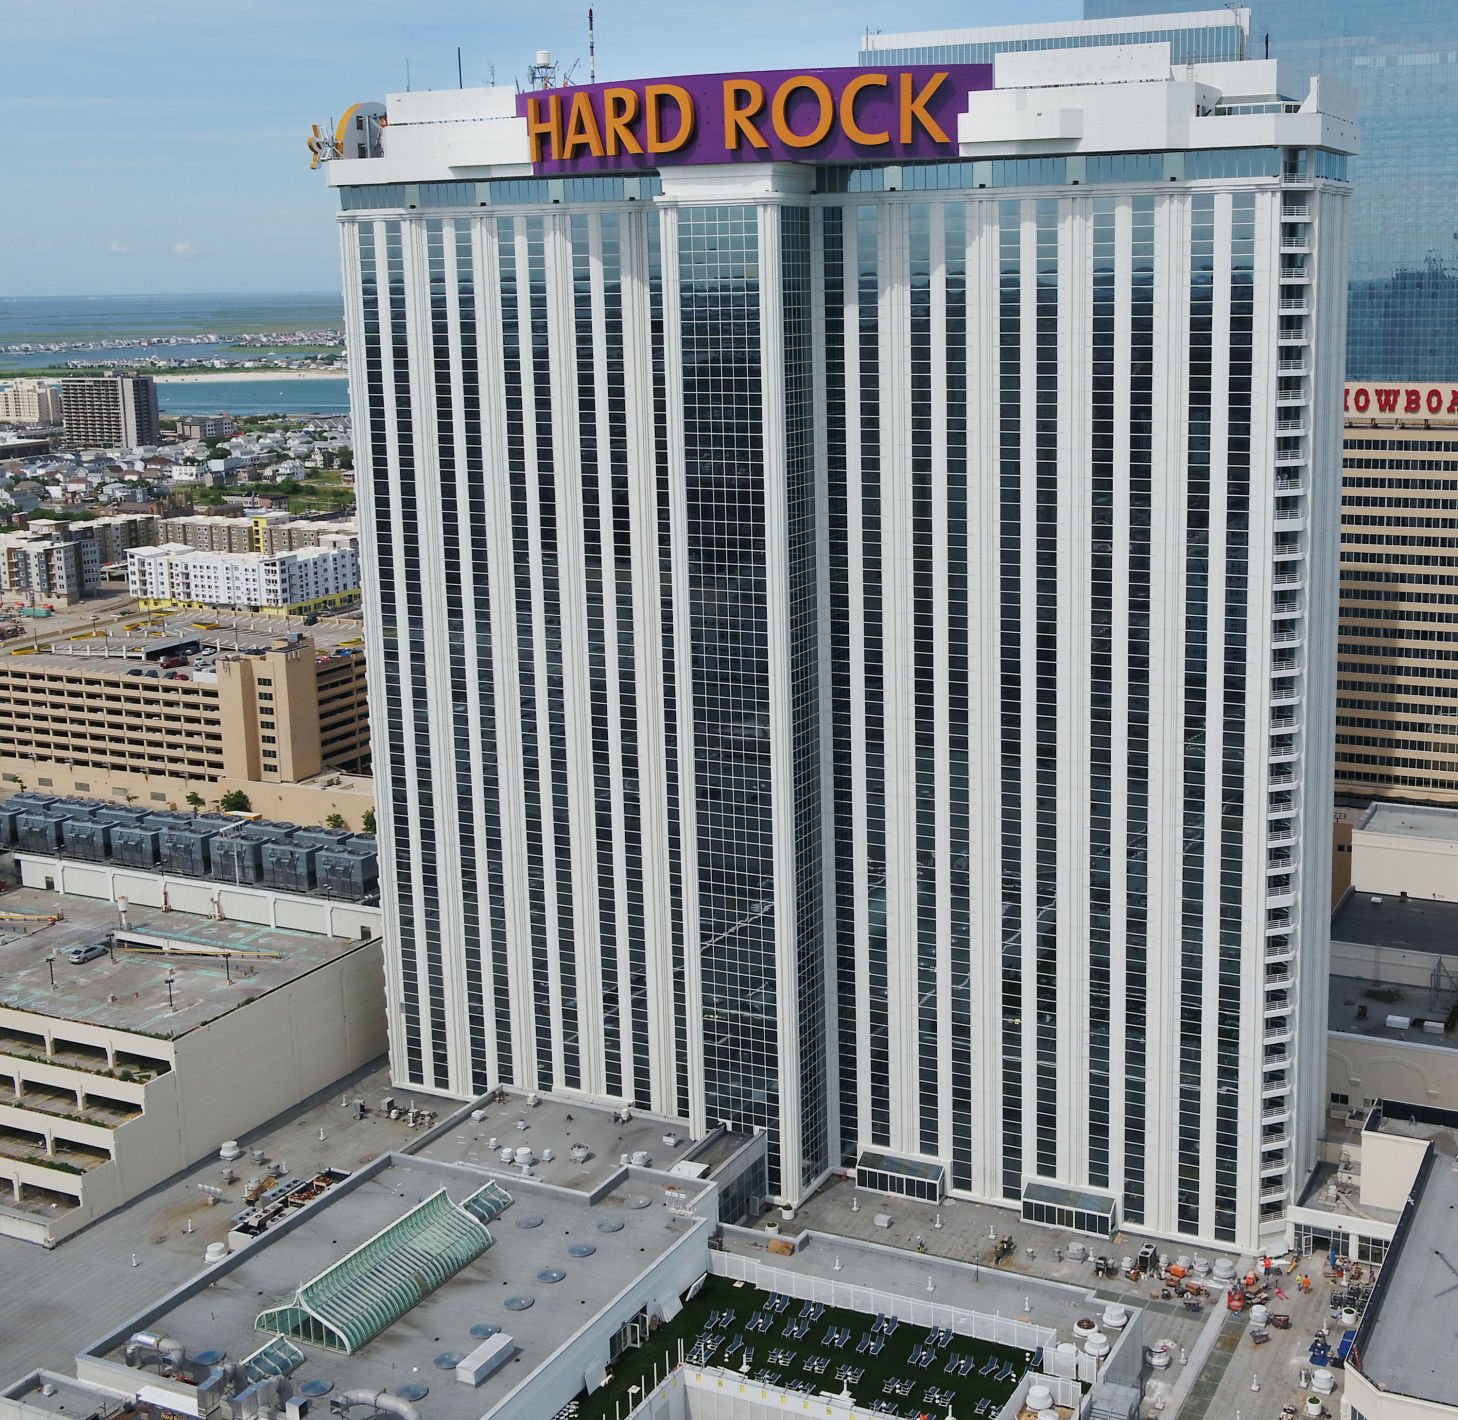 hard rock casino atlantic city roctane logo